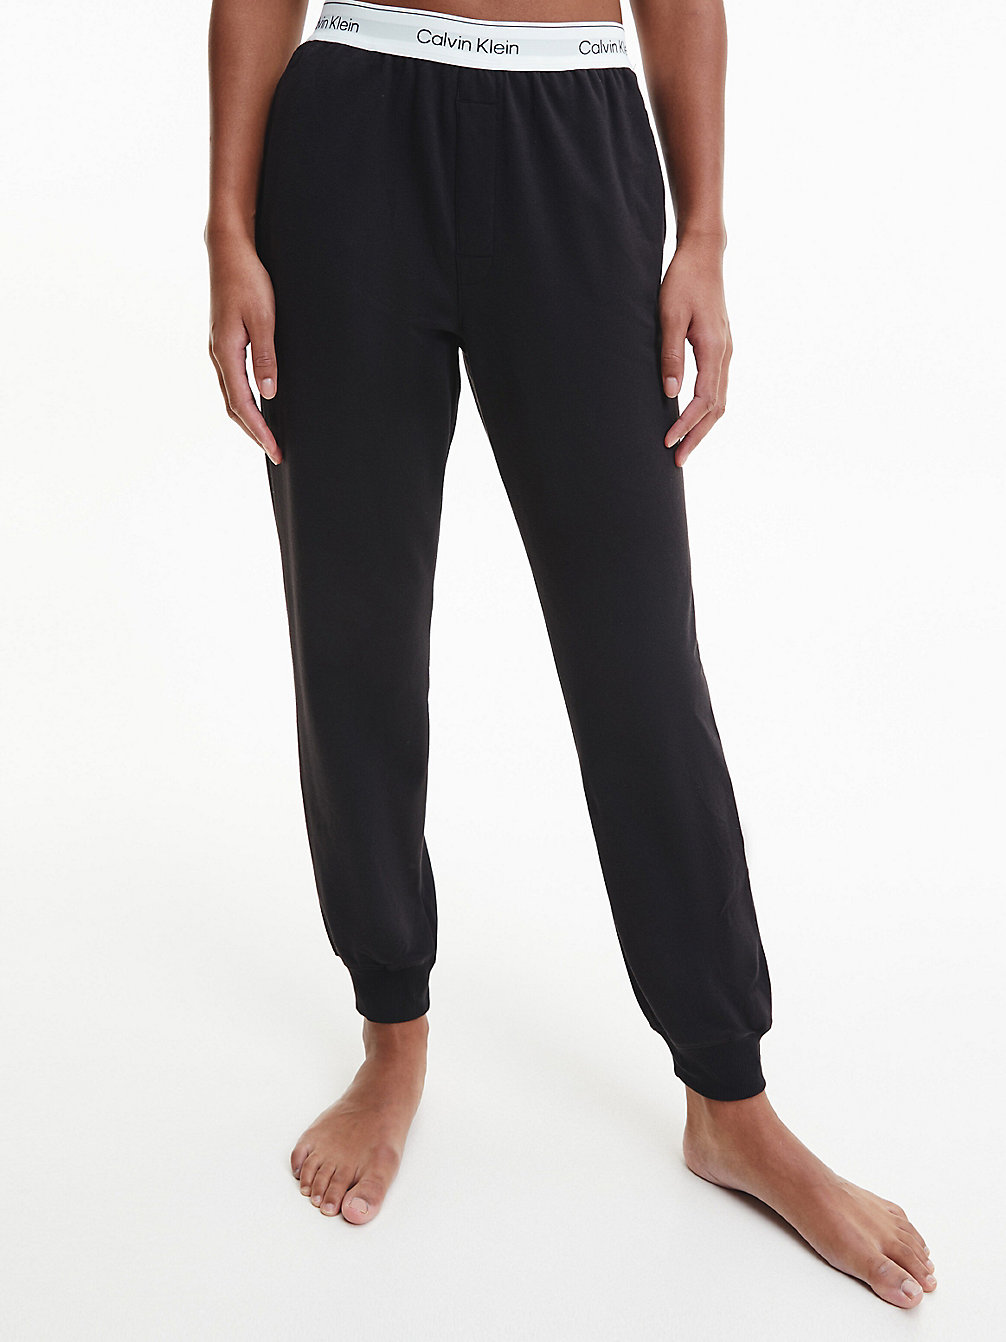 BLACK > Spodnie Od Piżamy - Modern Cotton > undefined Kobiety - Calvin Klein